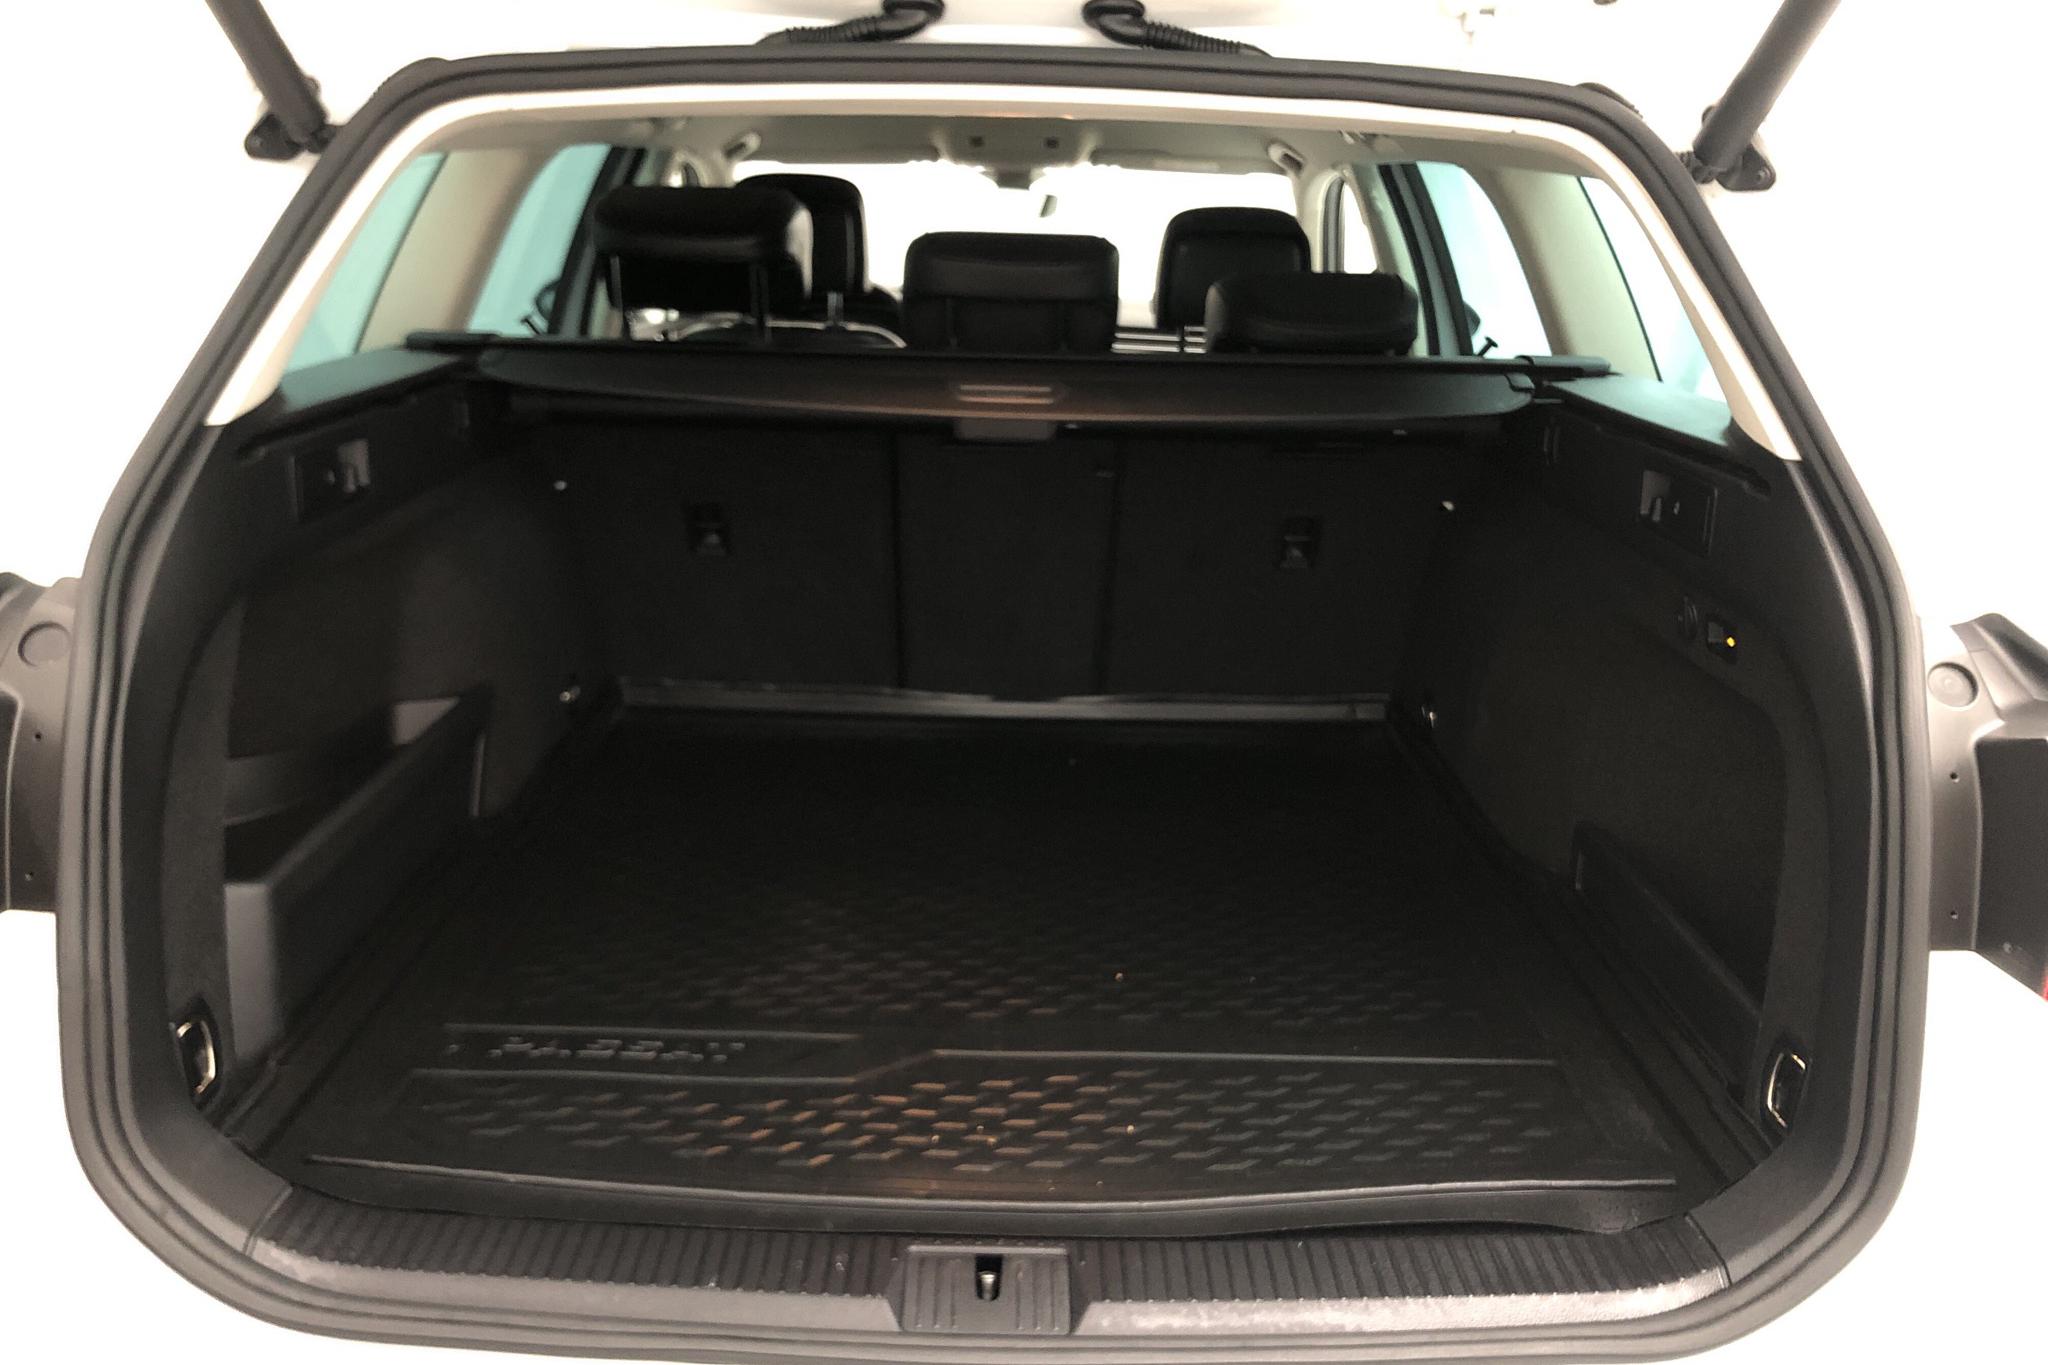 VW Passat Alltrack 2.0 TDI Sportscombi 4MOTION (190hk) - 72 000 km - Automatic - white - 2018